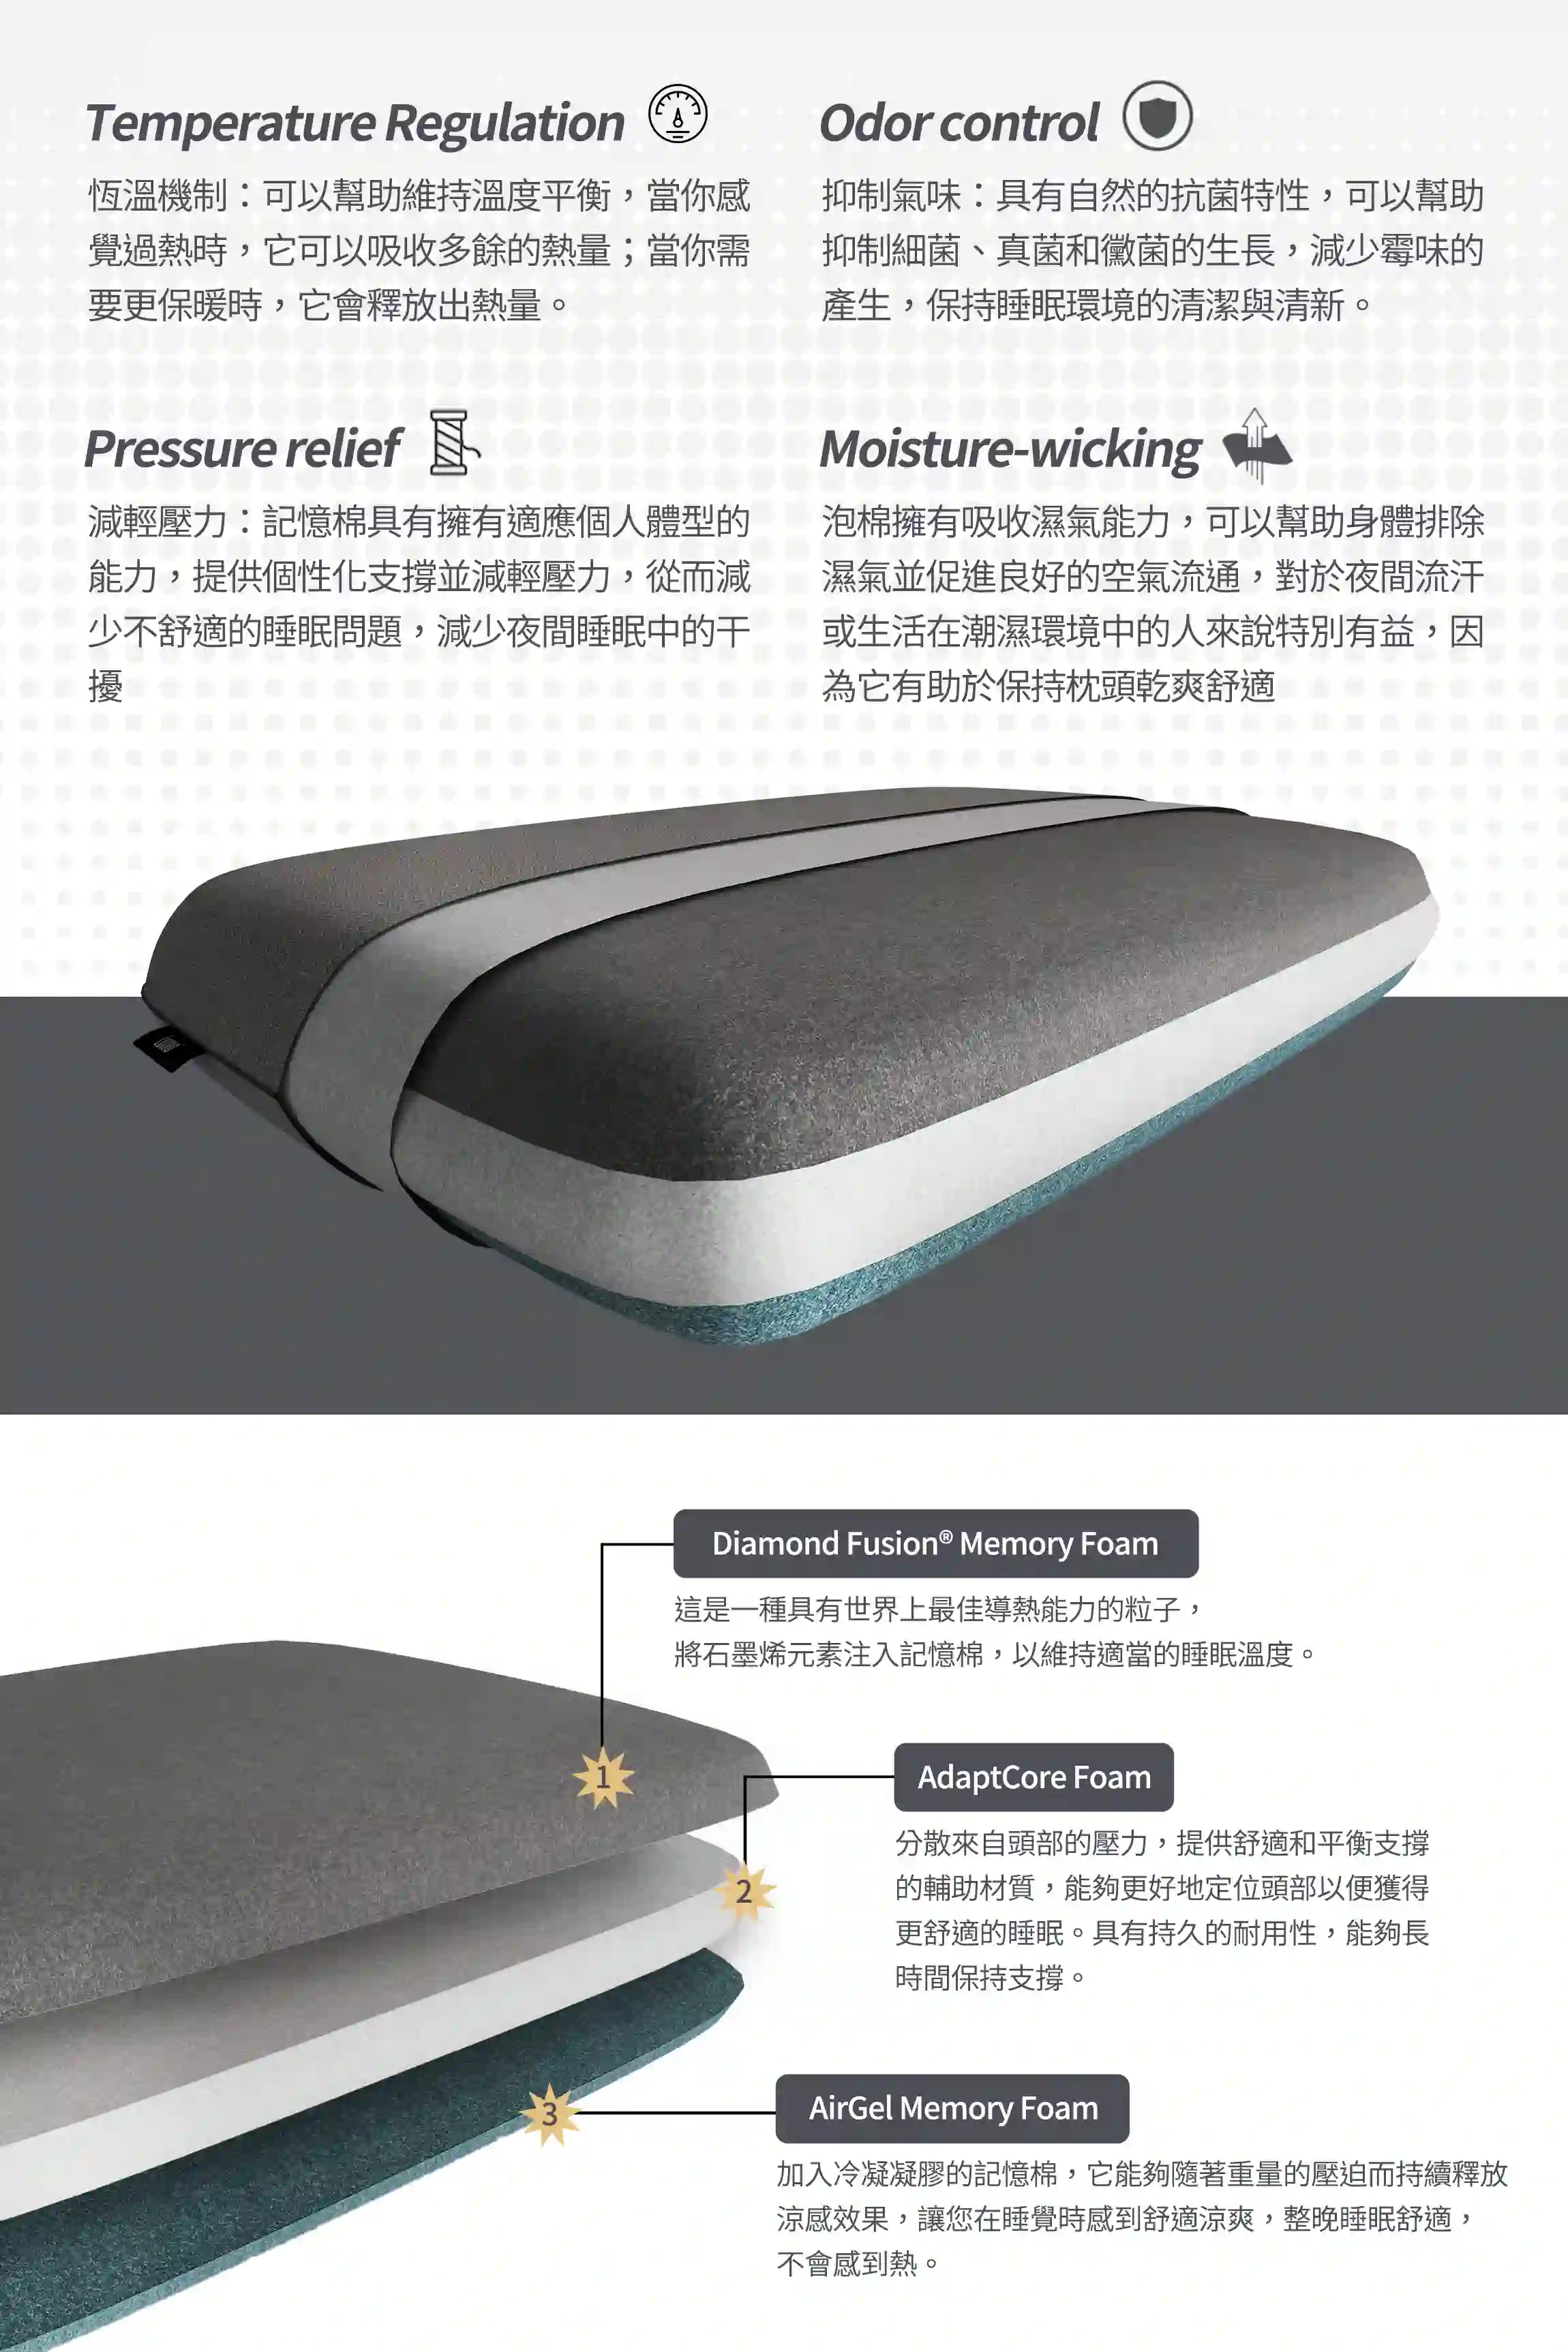 Mercury石墨烯機能記憶枕功能與枕芯結構介紹